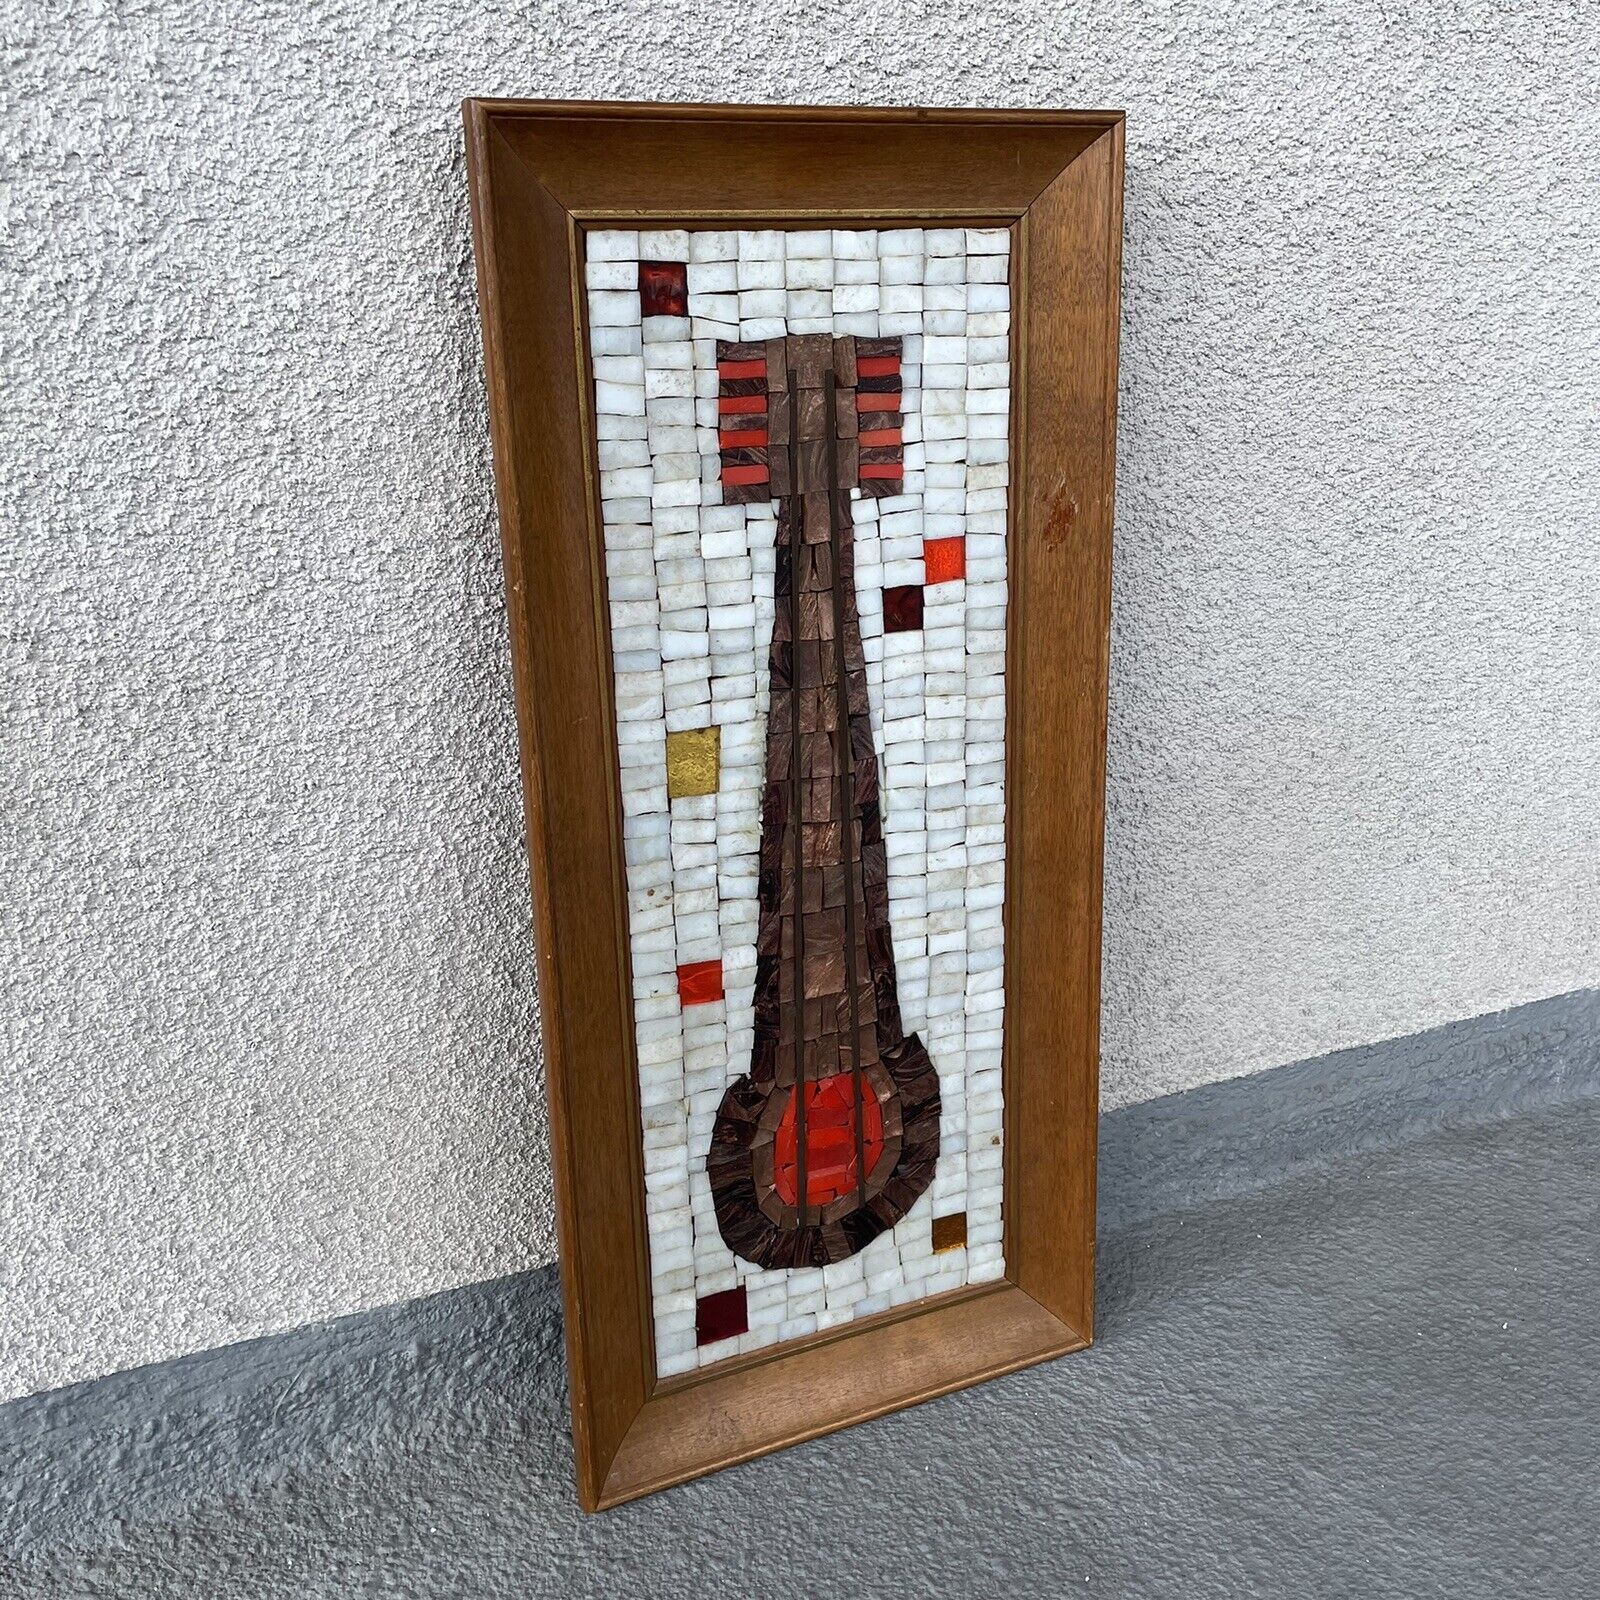 Vintage MCM Mid Century Ackerman Style Mosaic Tile Panel String Instrument Art